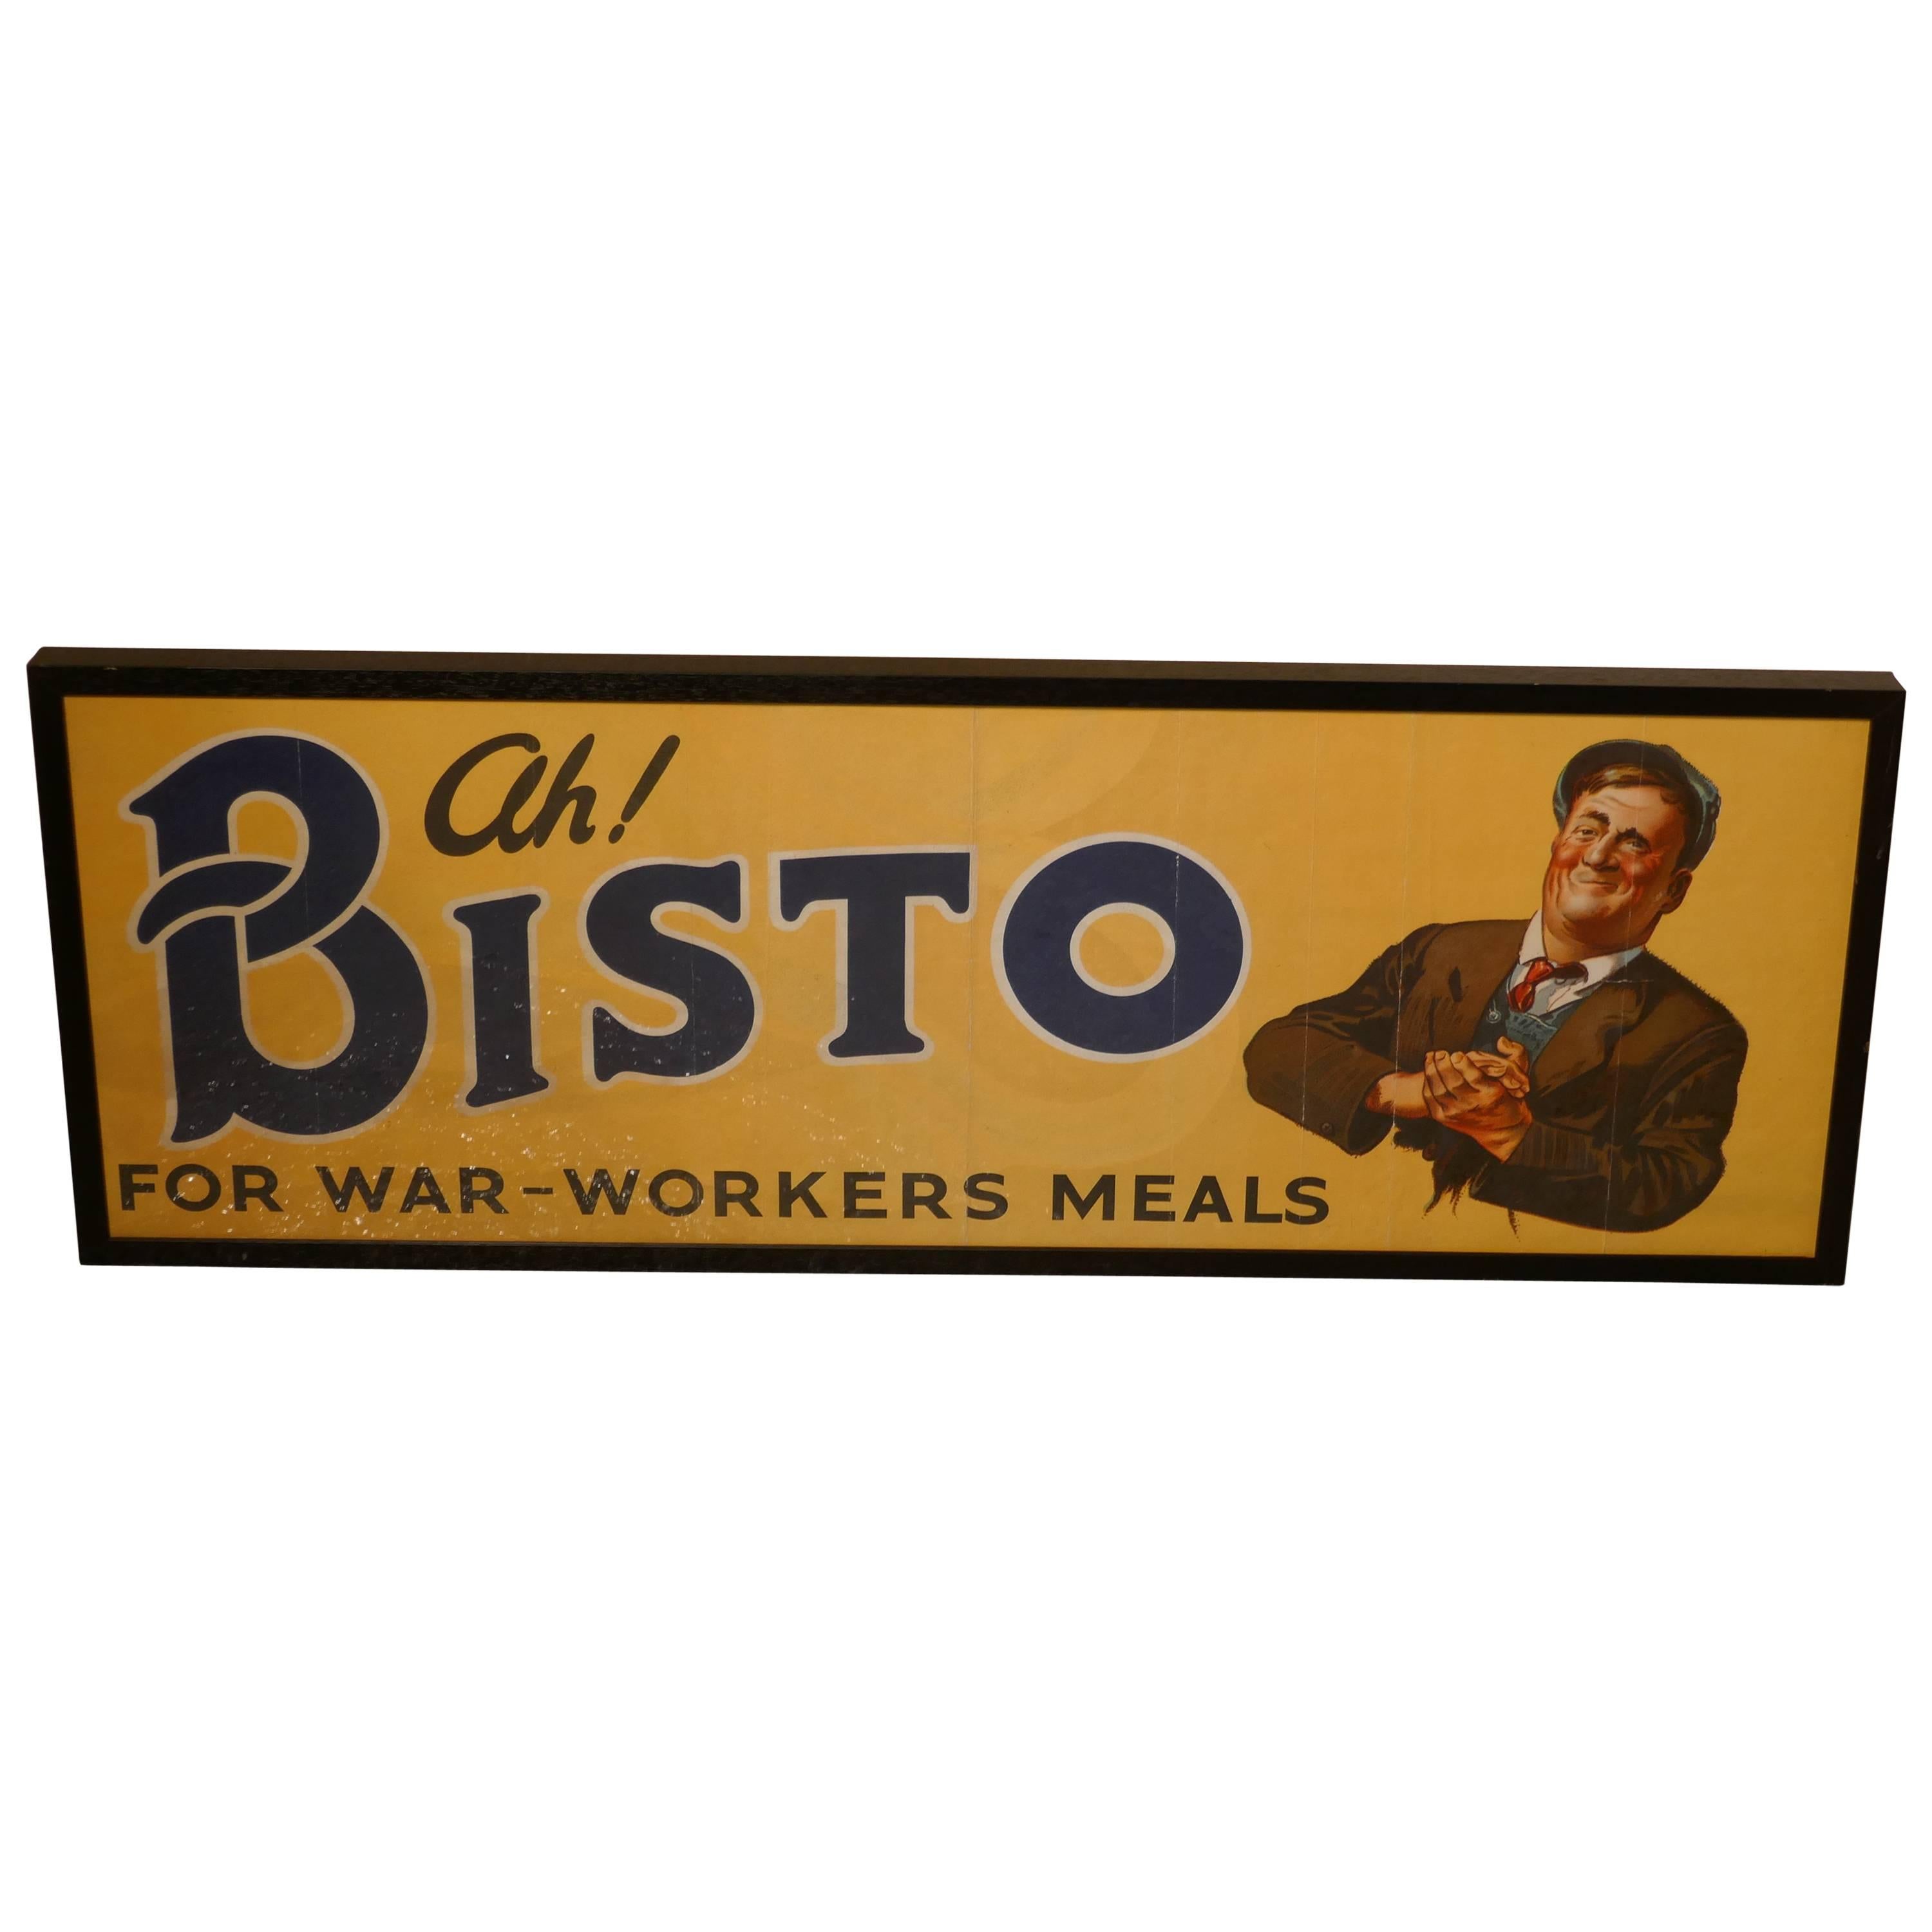 Framed Bisto Advertising Sign, Ah Bisto for War-Workers Meals Advertising Sign